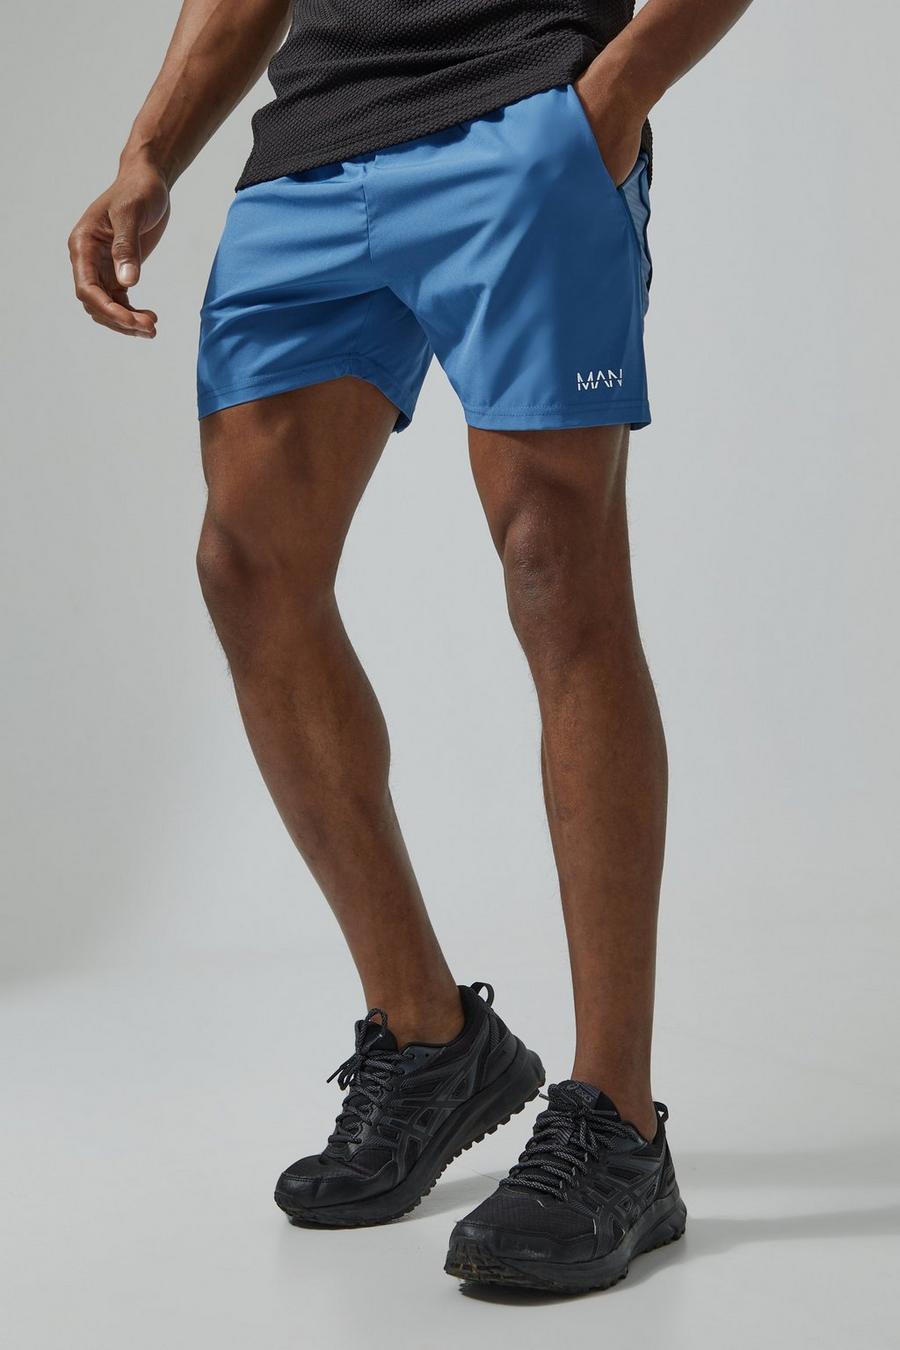 Man Active strukturierte Colorblock Mesh-Shorts, Dusty blue image number 1